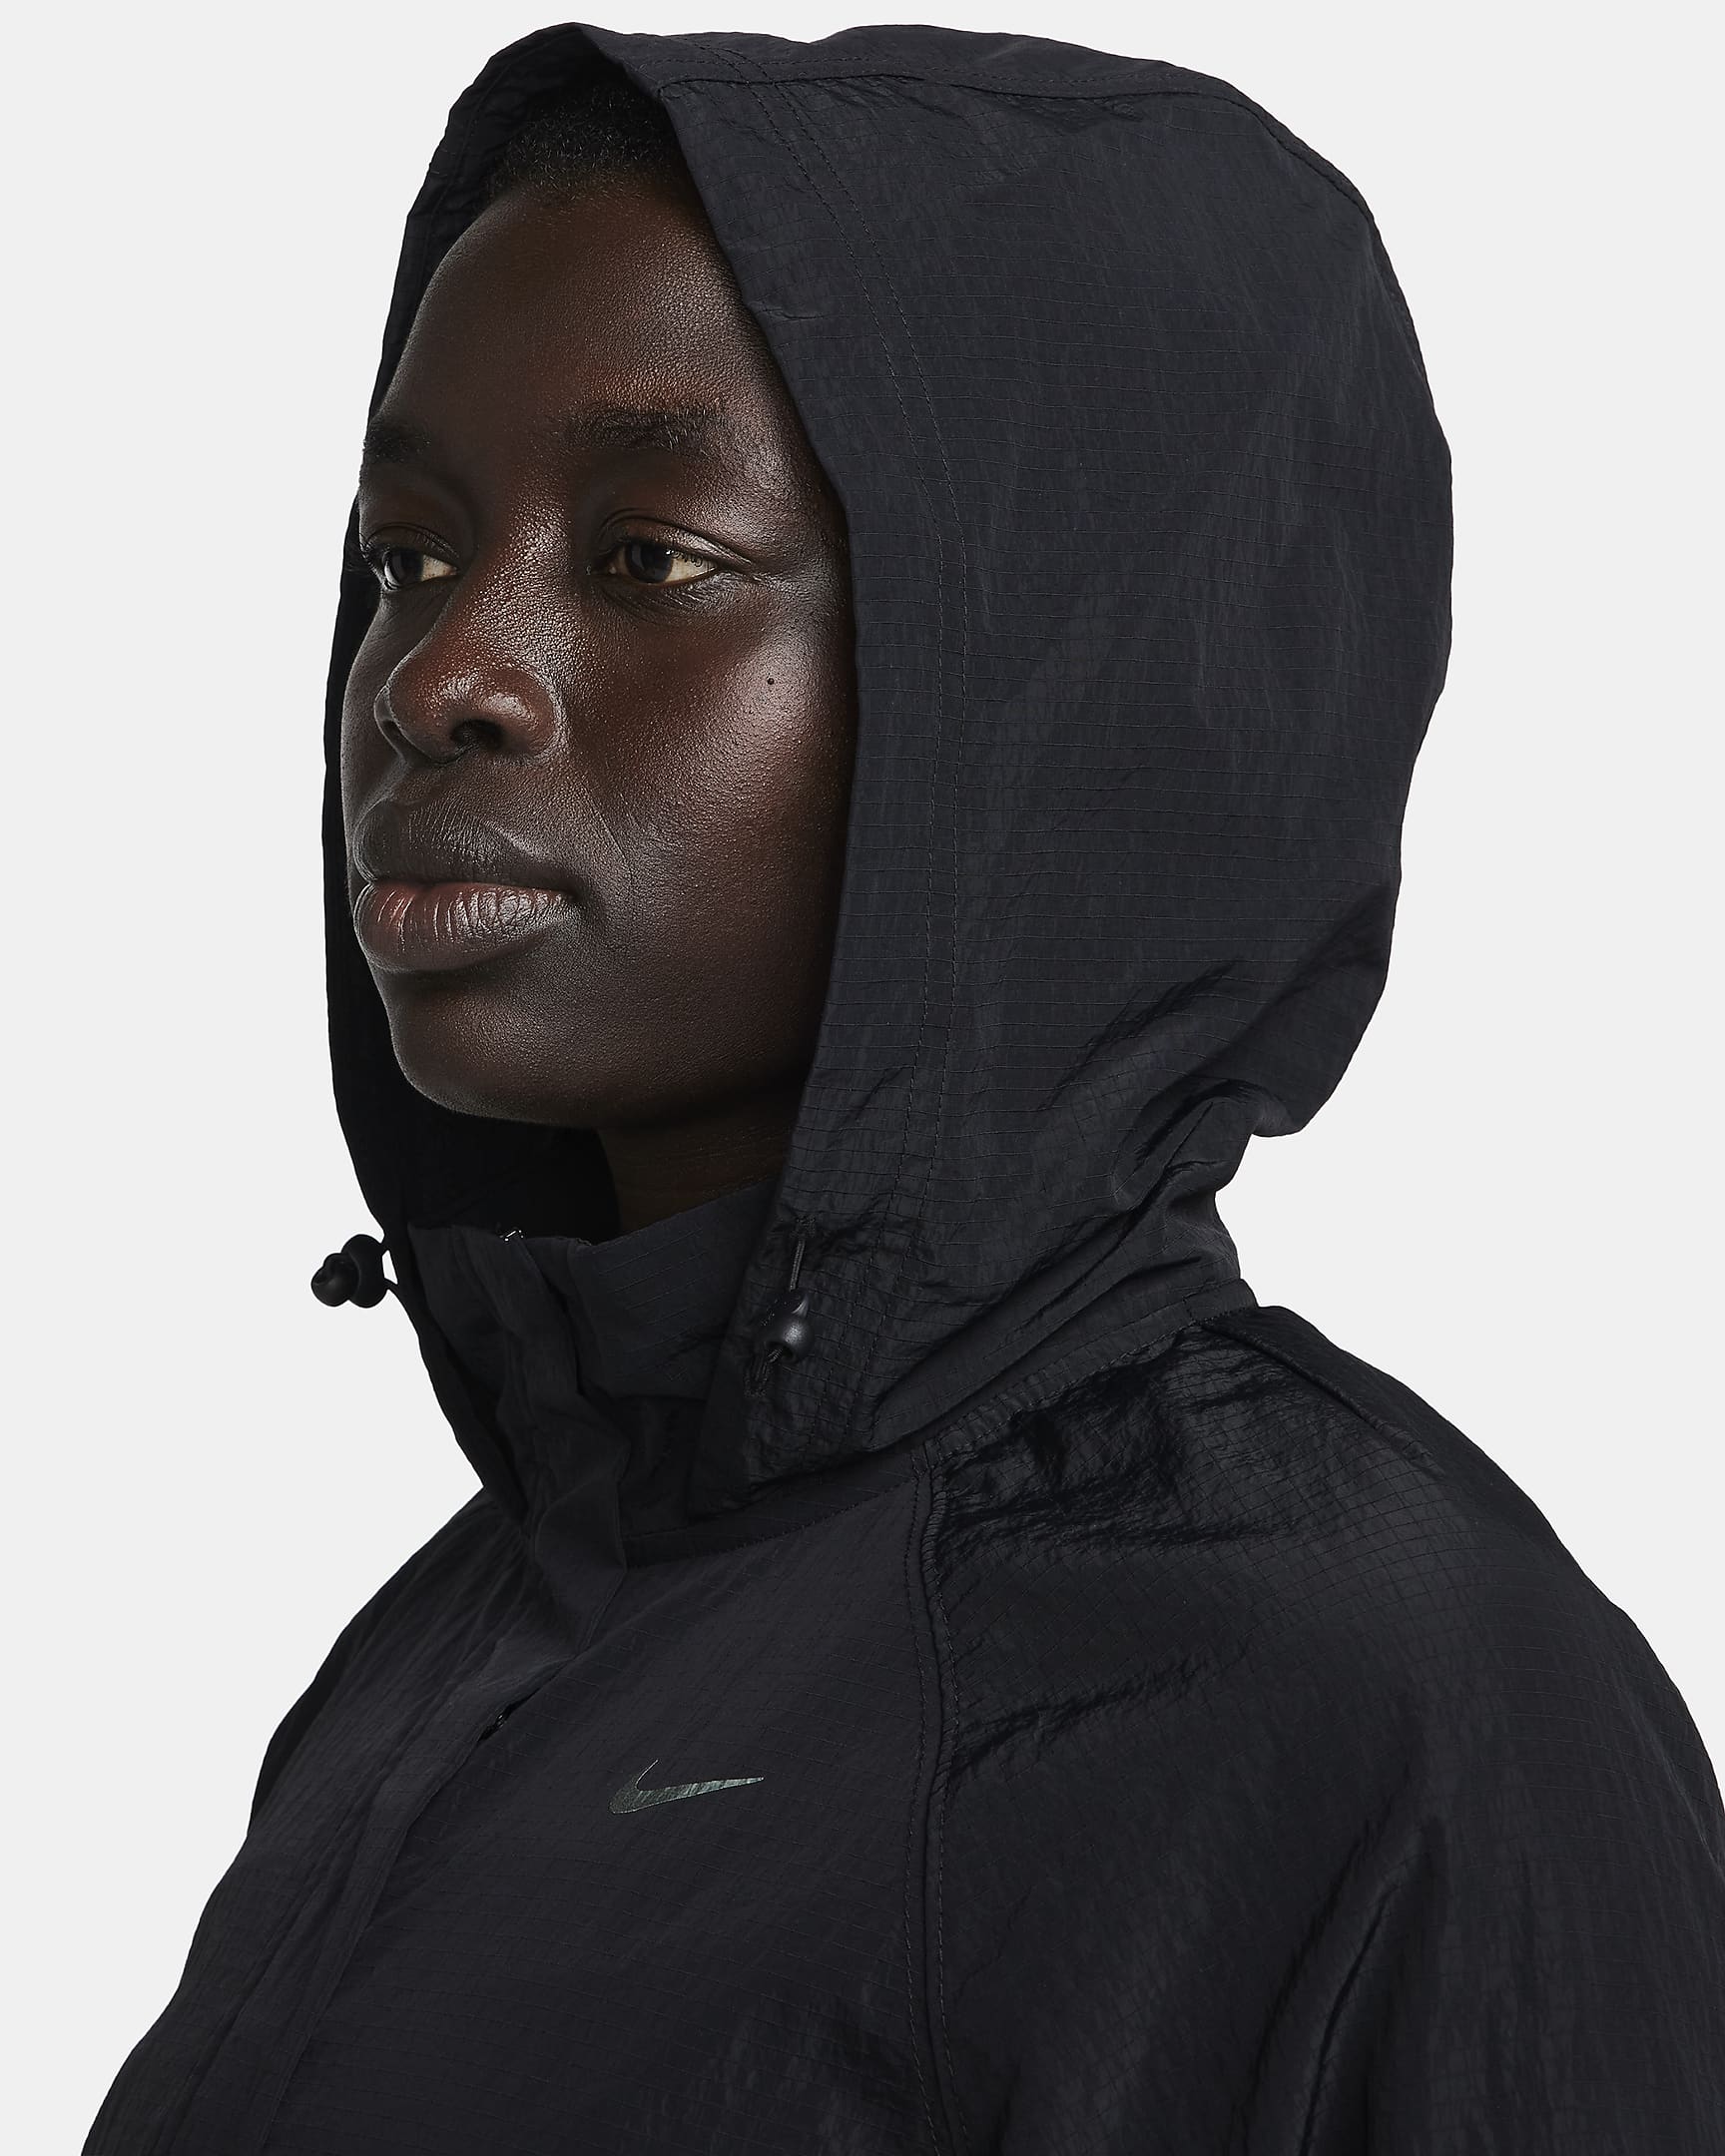 Nike Running Division Women's Repel Jacket - Black/Black